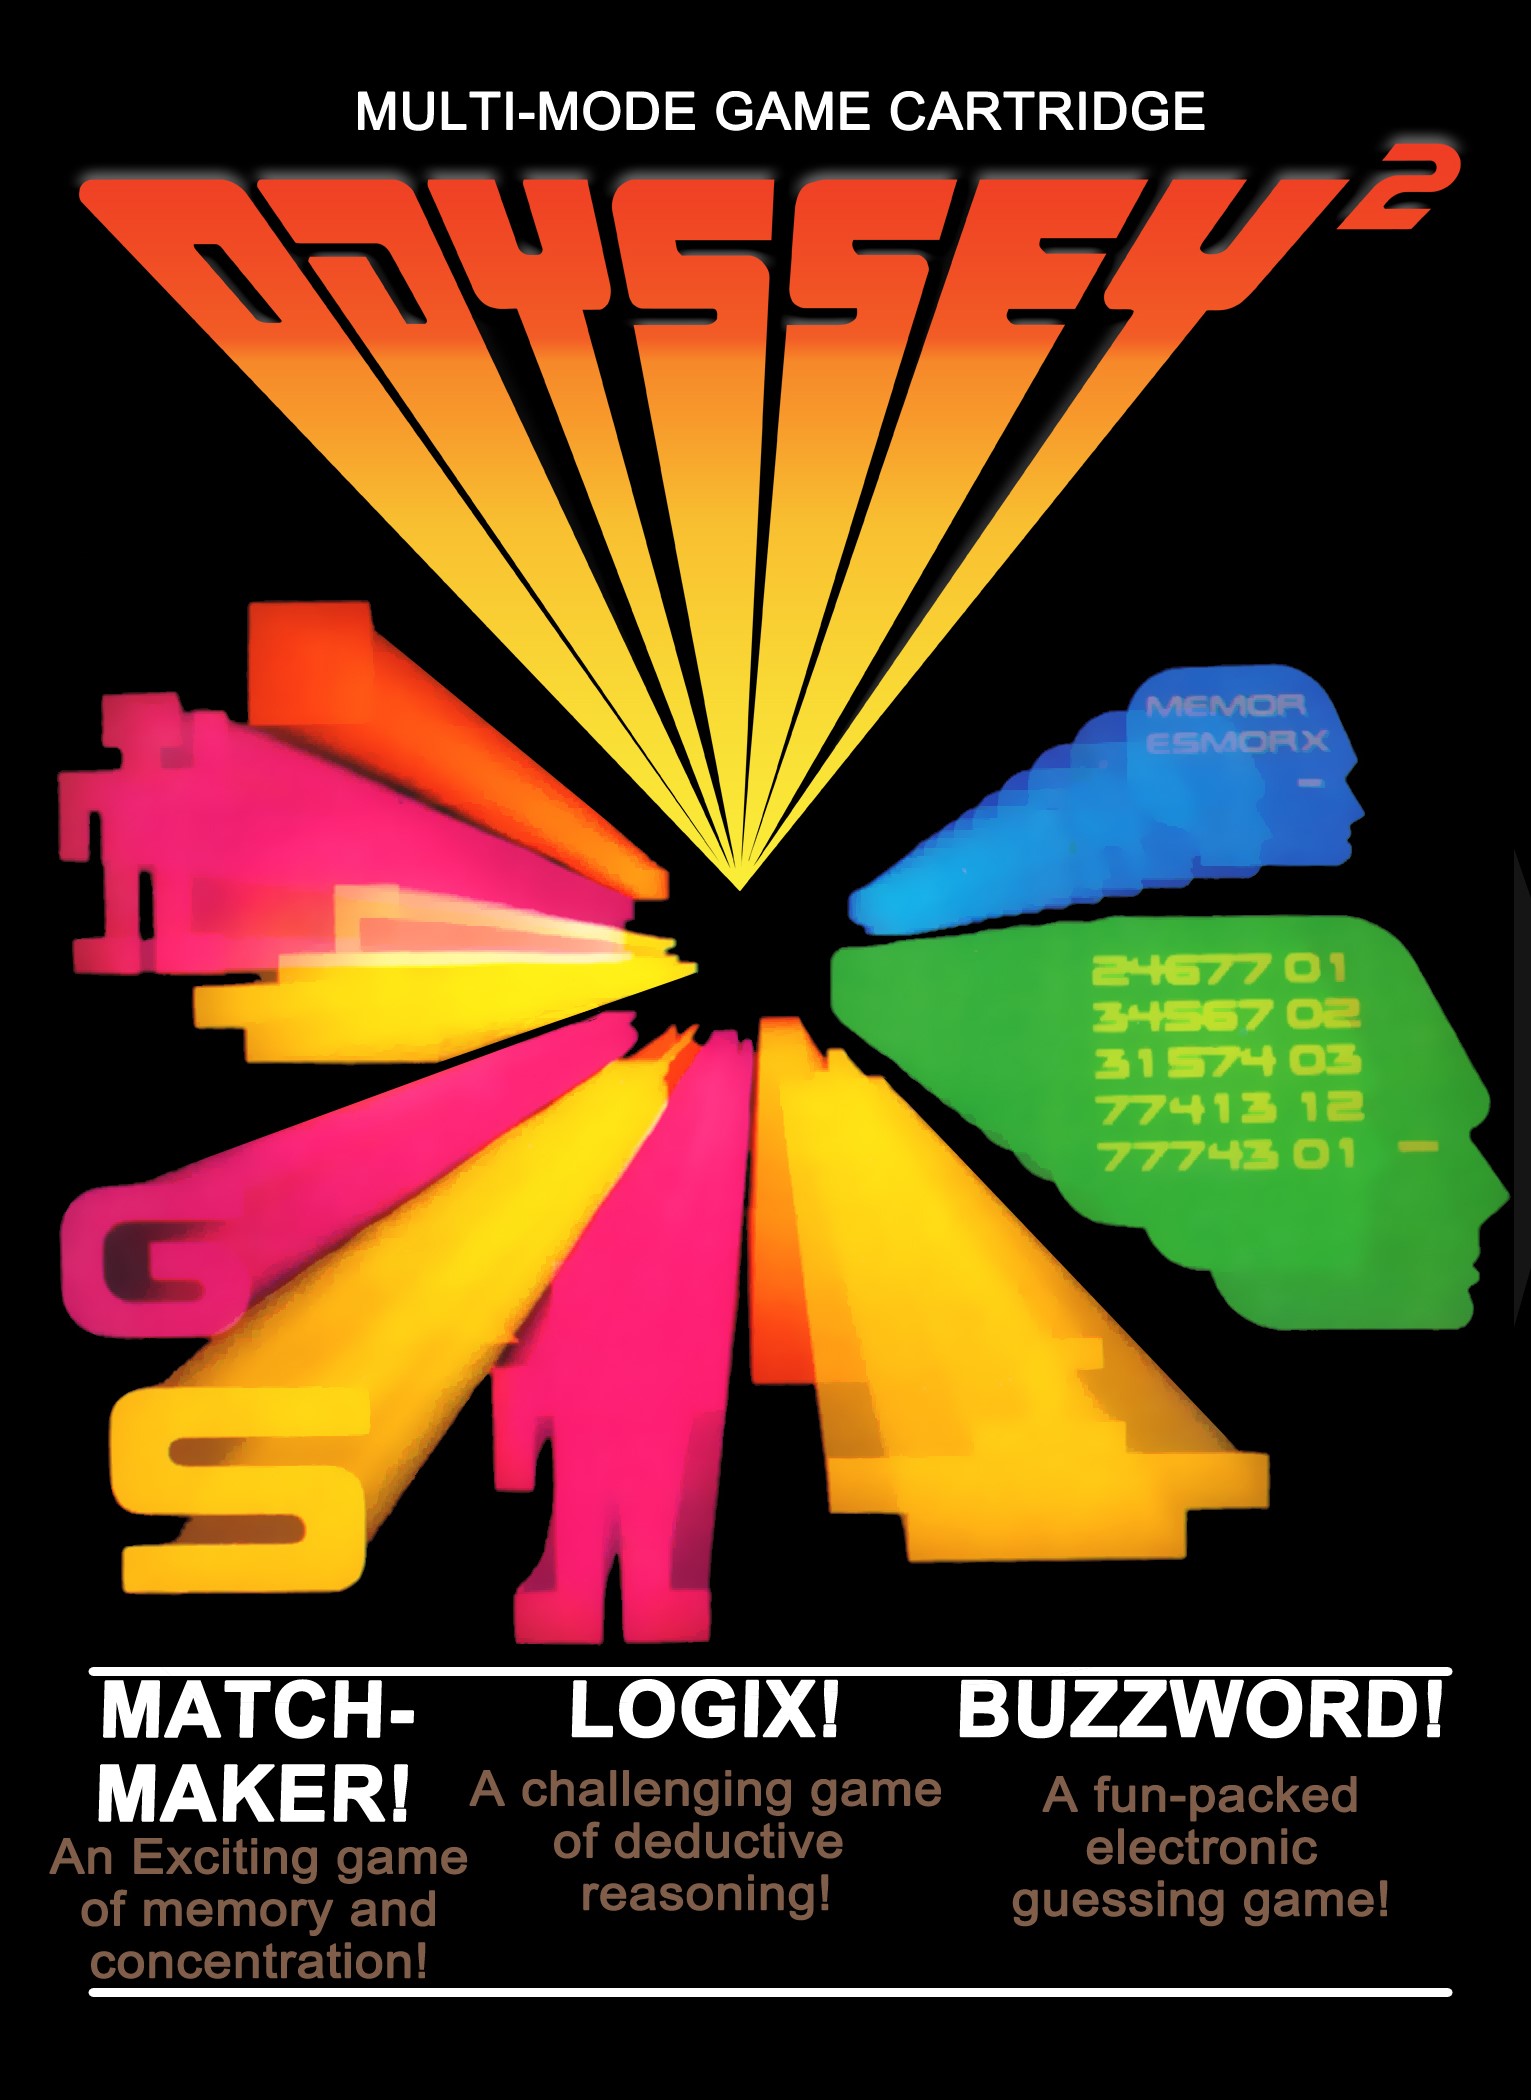 'Match-Maker!' / 'Logix!' / 'Buzzword!'